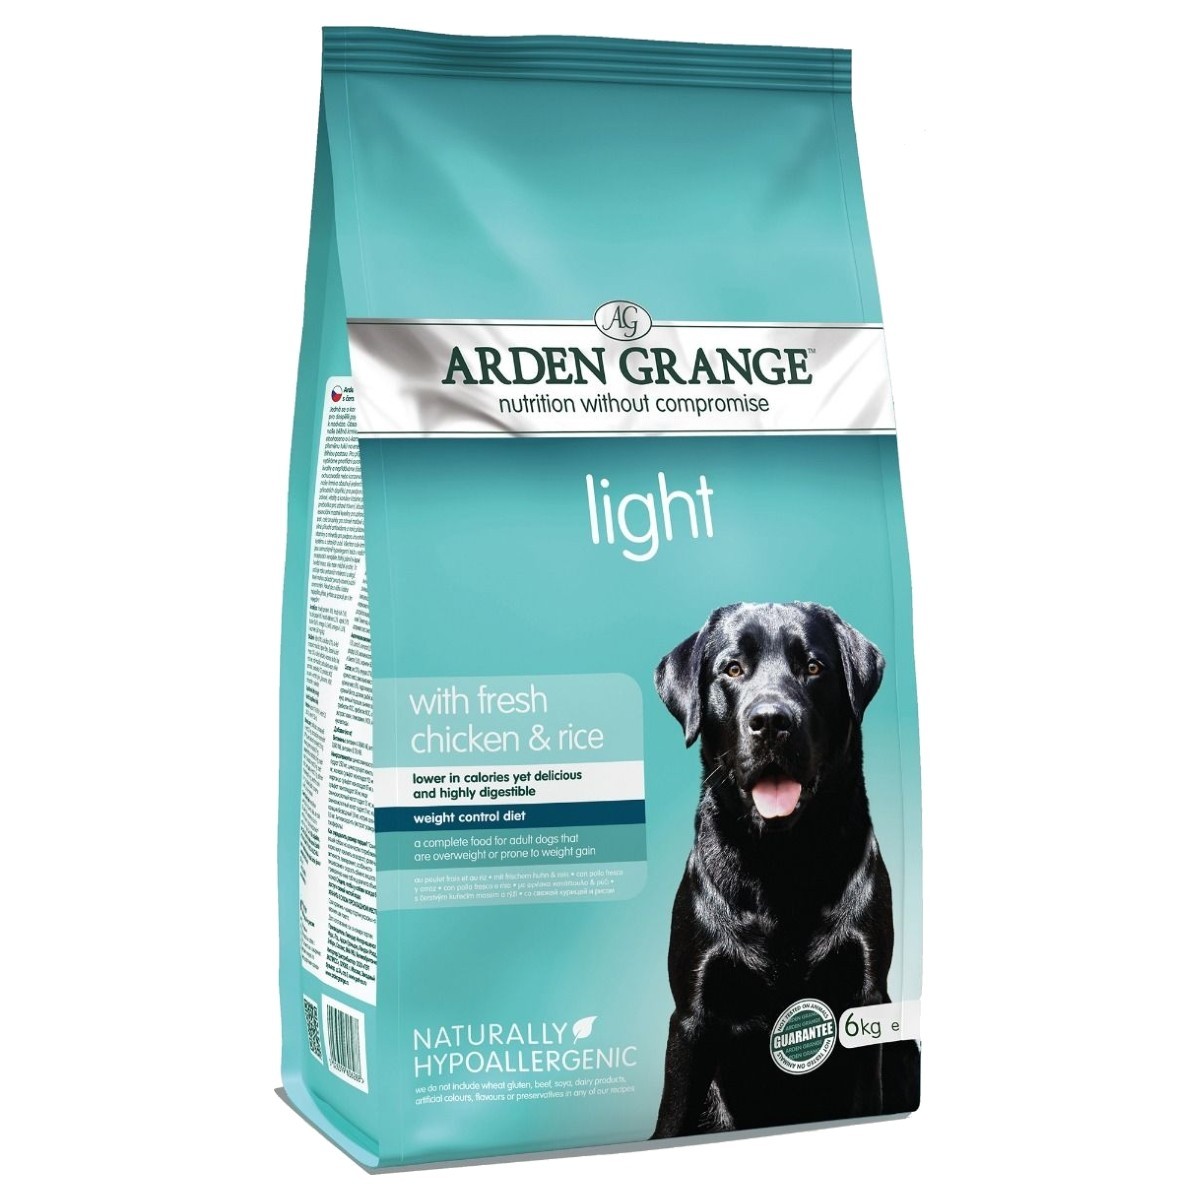 Купить корм премиум класса. Корм для собак Арден Грендж. Корм Arden Grange. Senior&Light sensitive (Arden Grange для чувствительных пожилых собак). Arden Grange sensitive для собак.